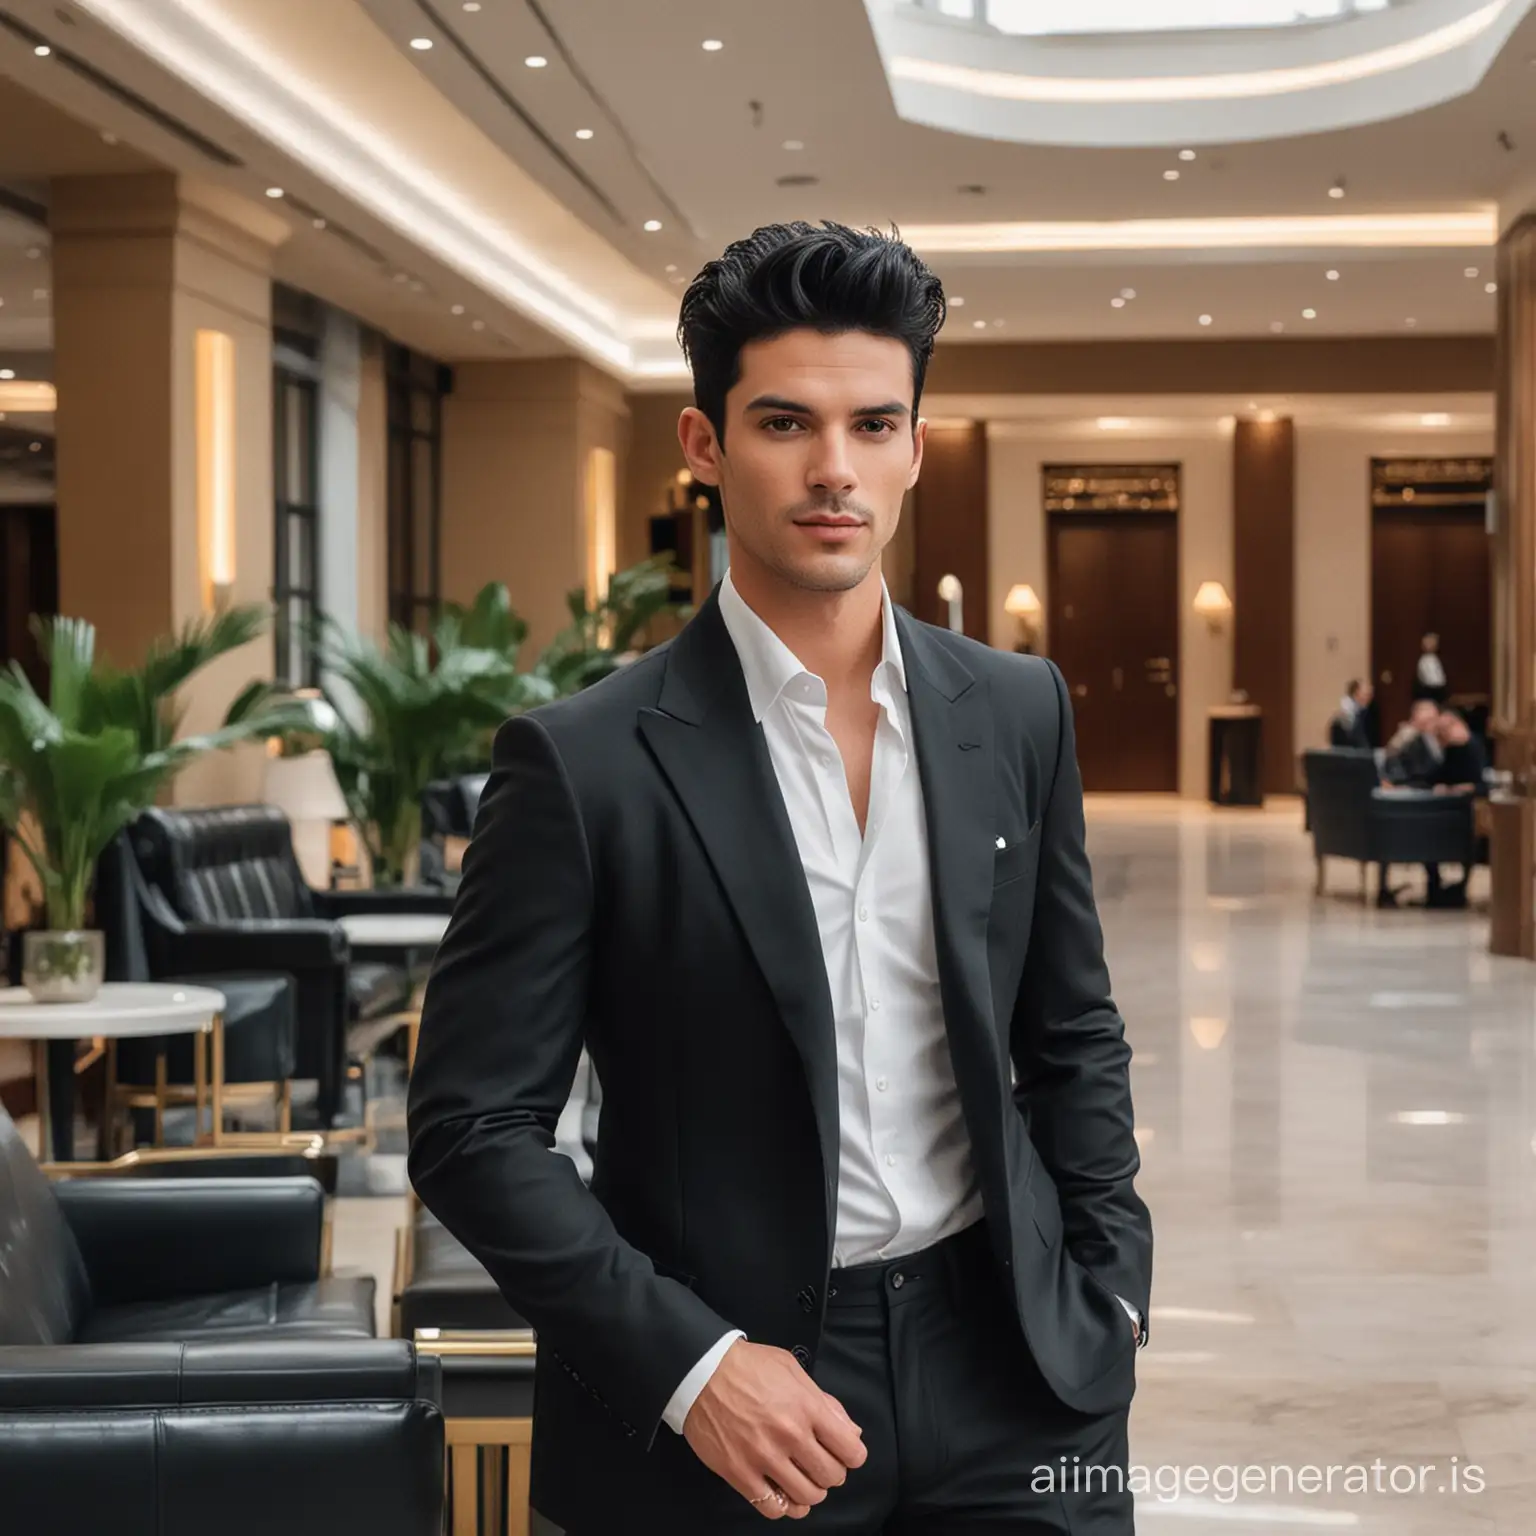 A stylish man with black hair in hotel lobby